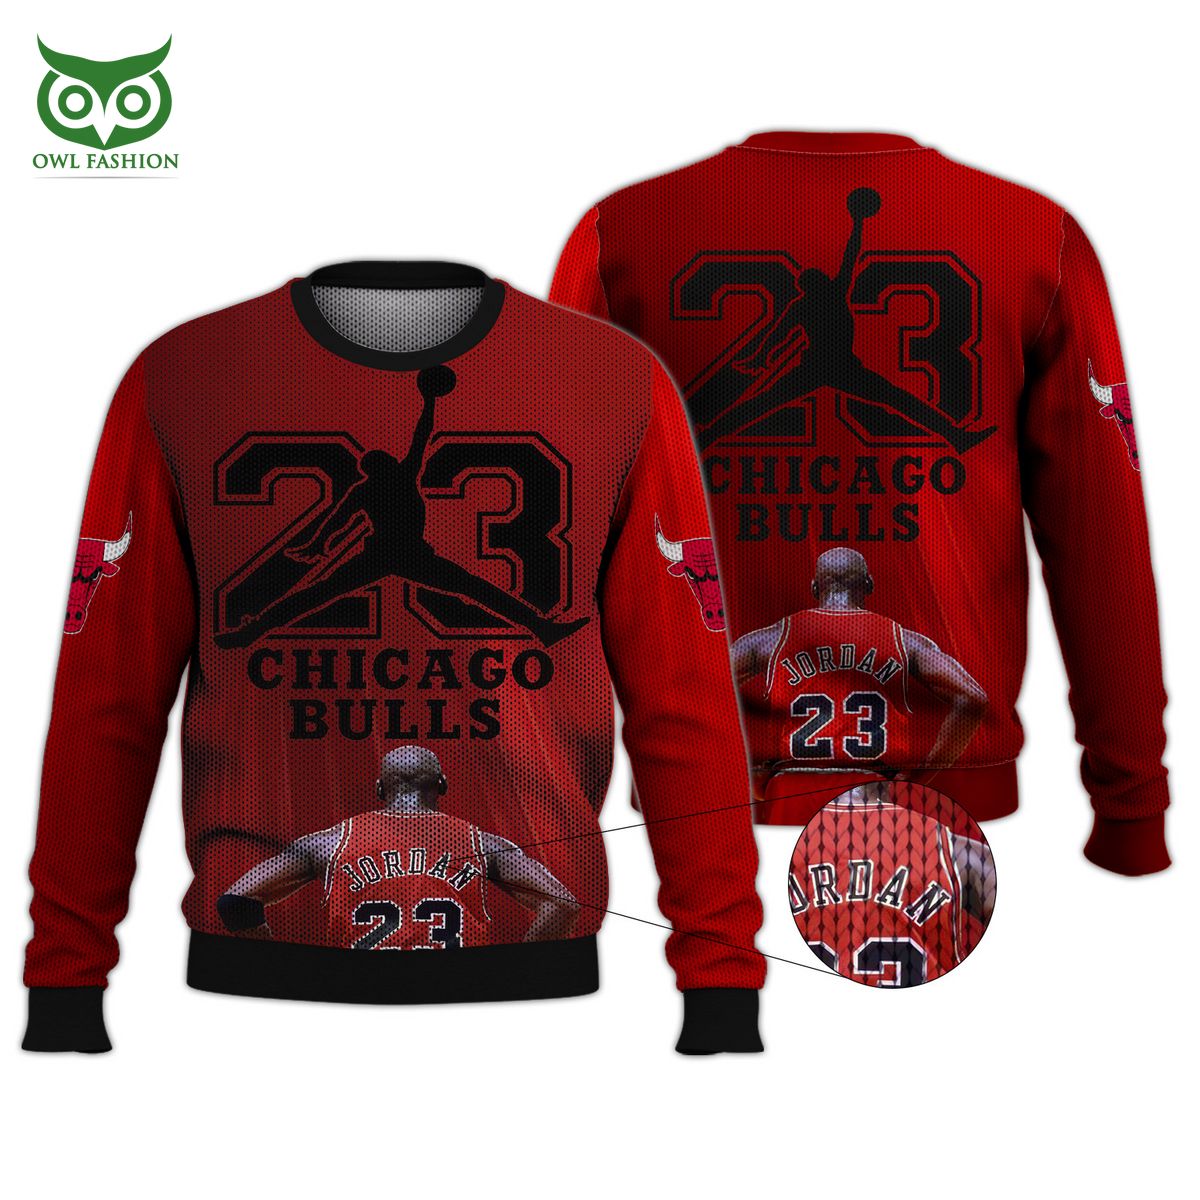 Air 23 jordan player basketball nba chicago bulls shirt, hoodie, sweater,  long sleeve and tank top